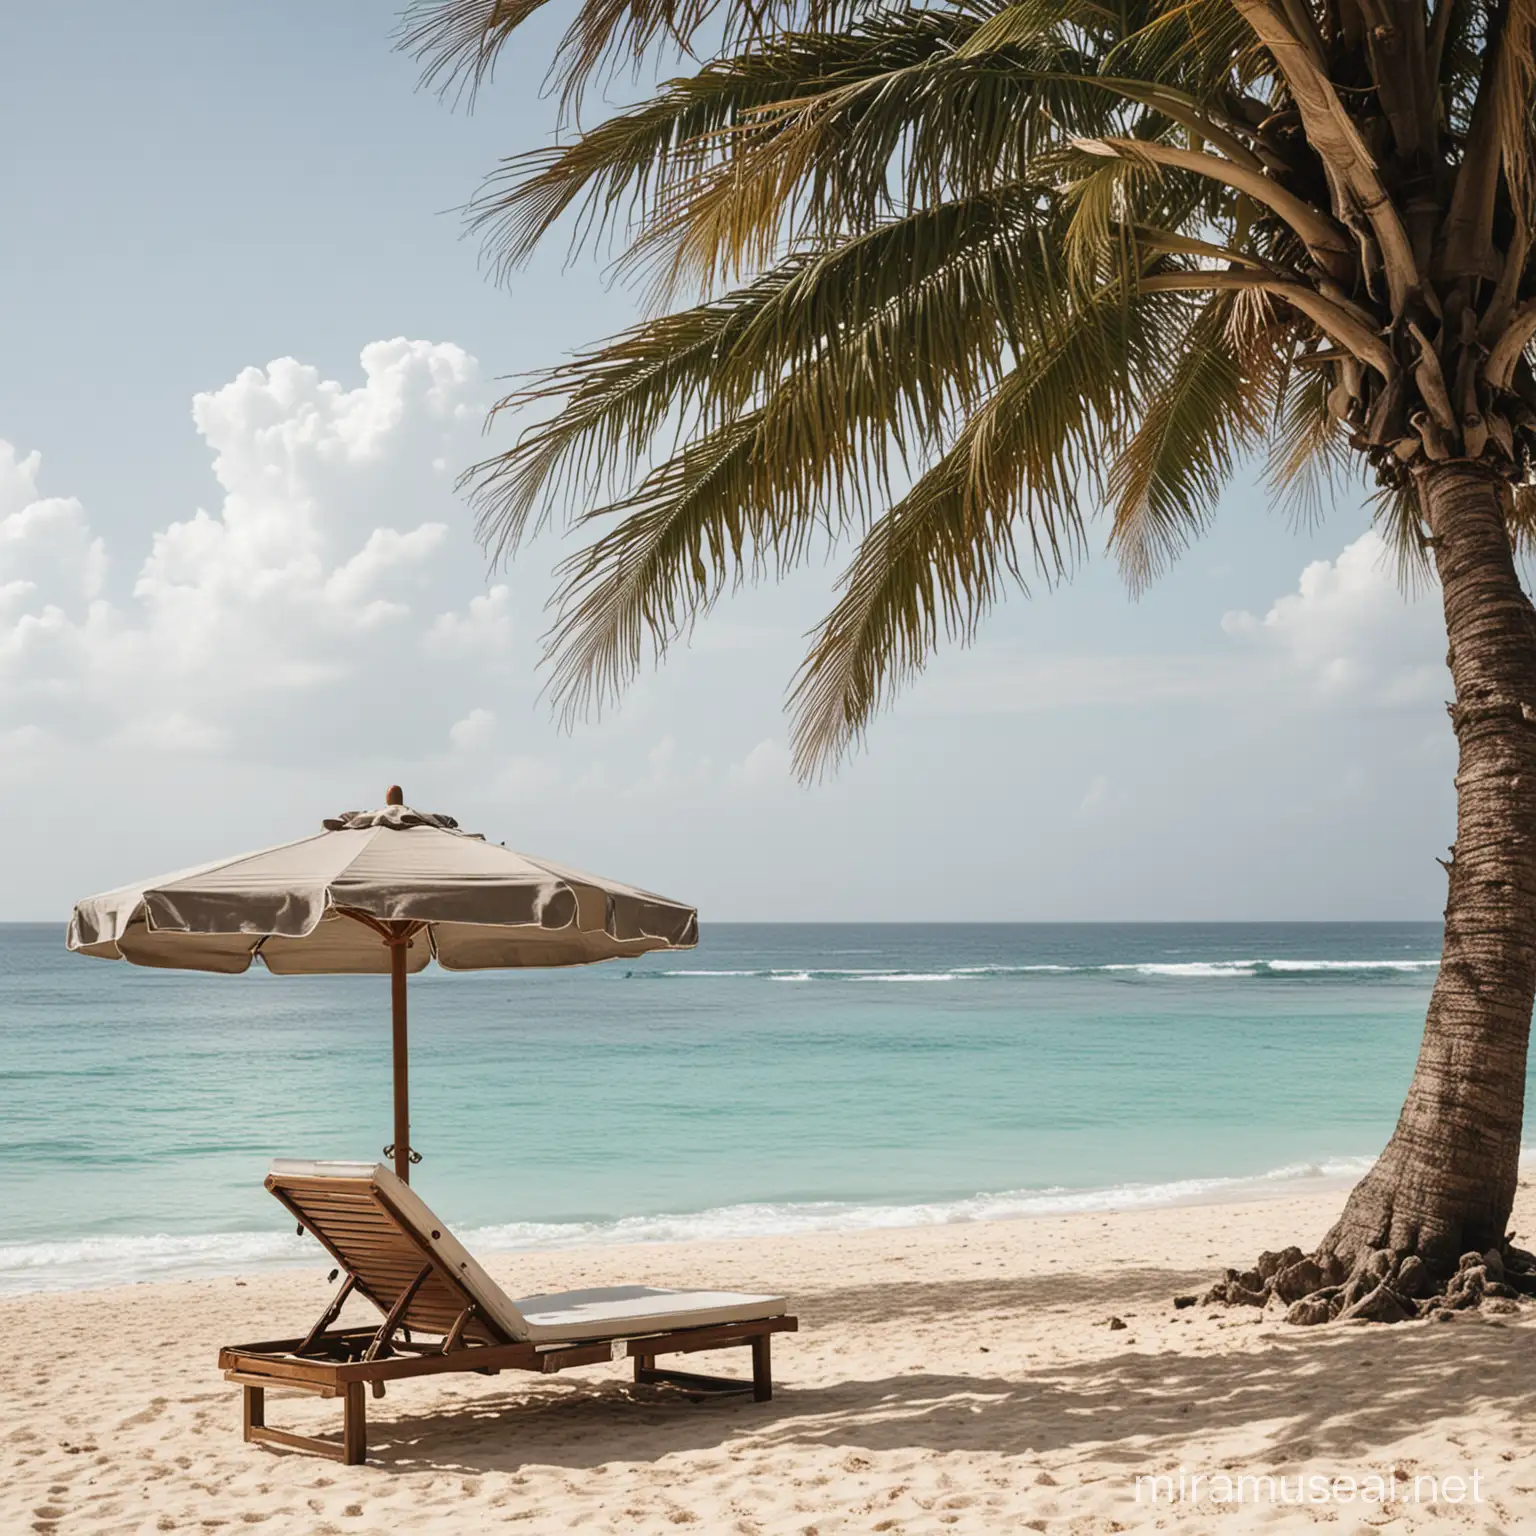 An umbrella and chaise lounge on a jamaican beach